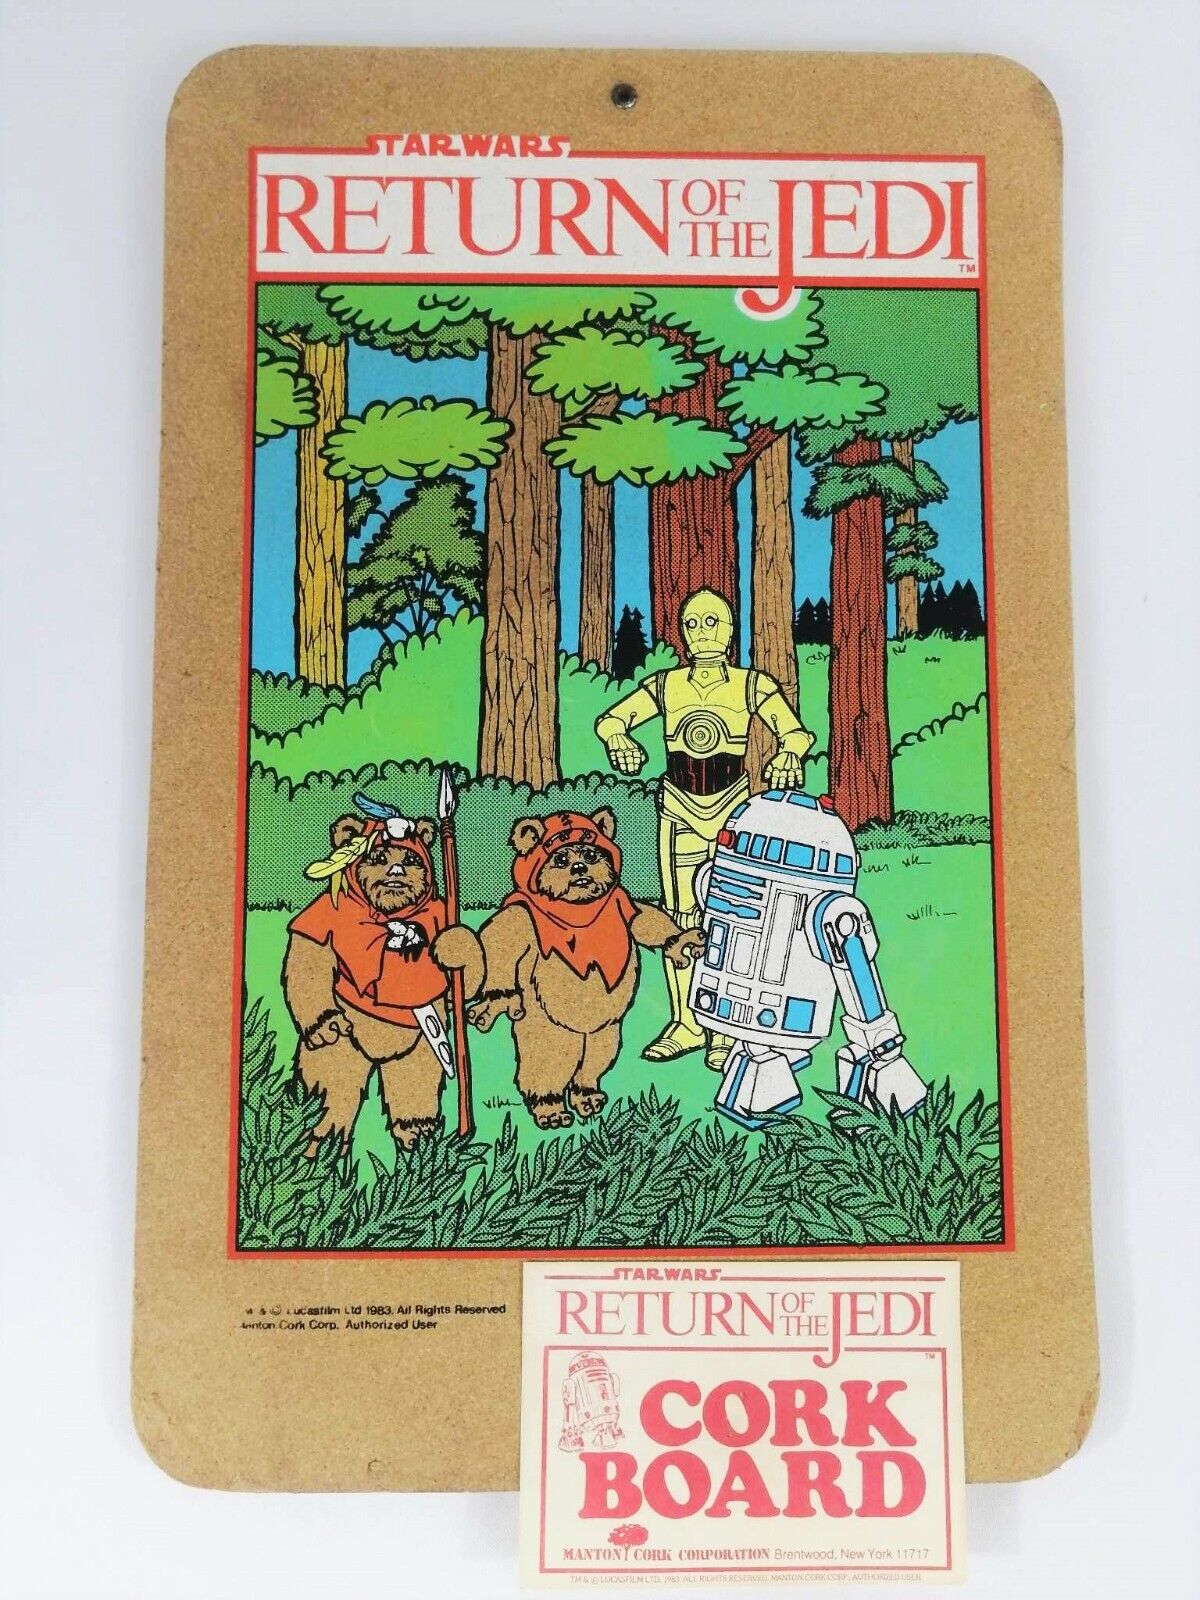 Vintage 1983 Star Wars ROTJ Return of the Jedi Corkboard with paper ewoks R2-D2